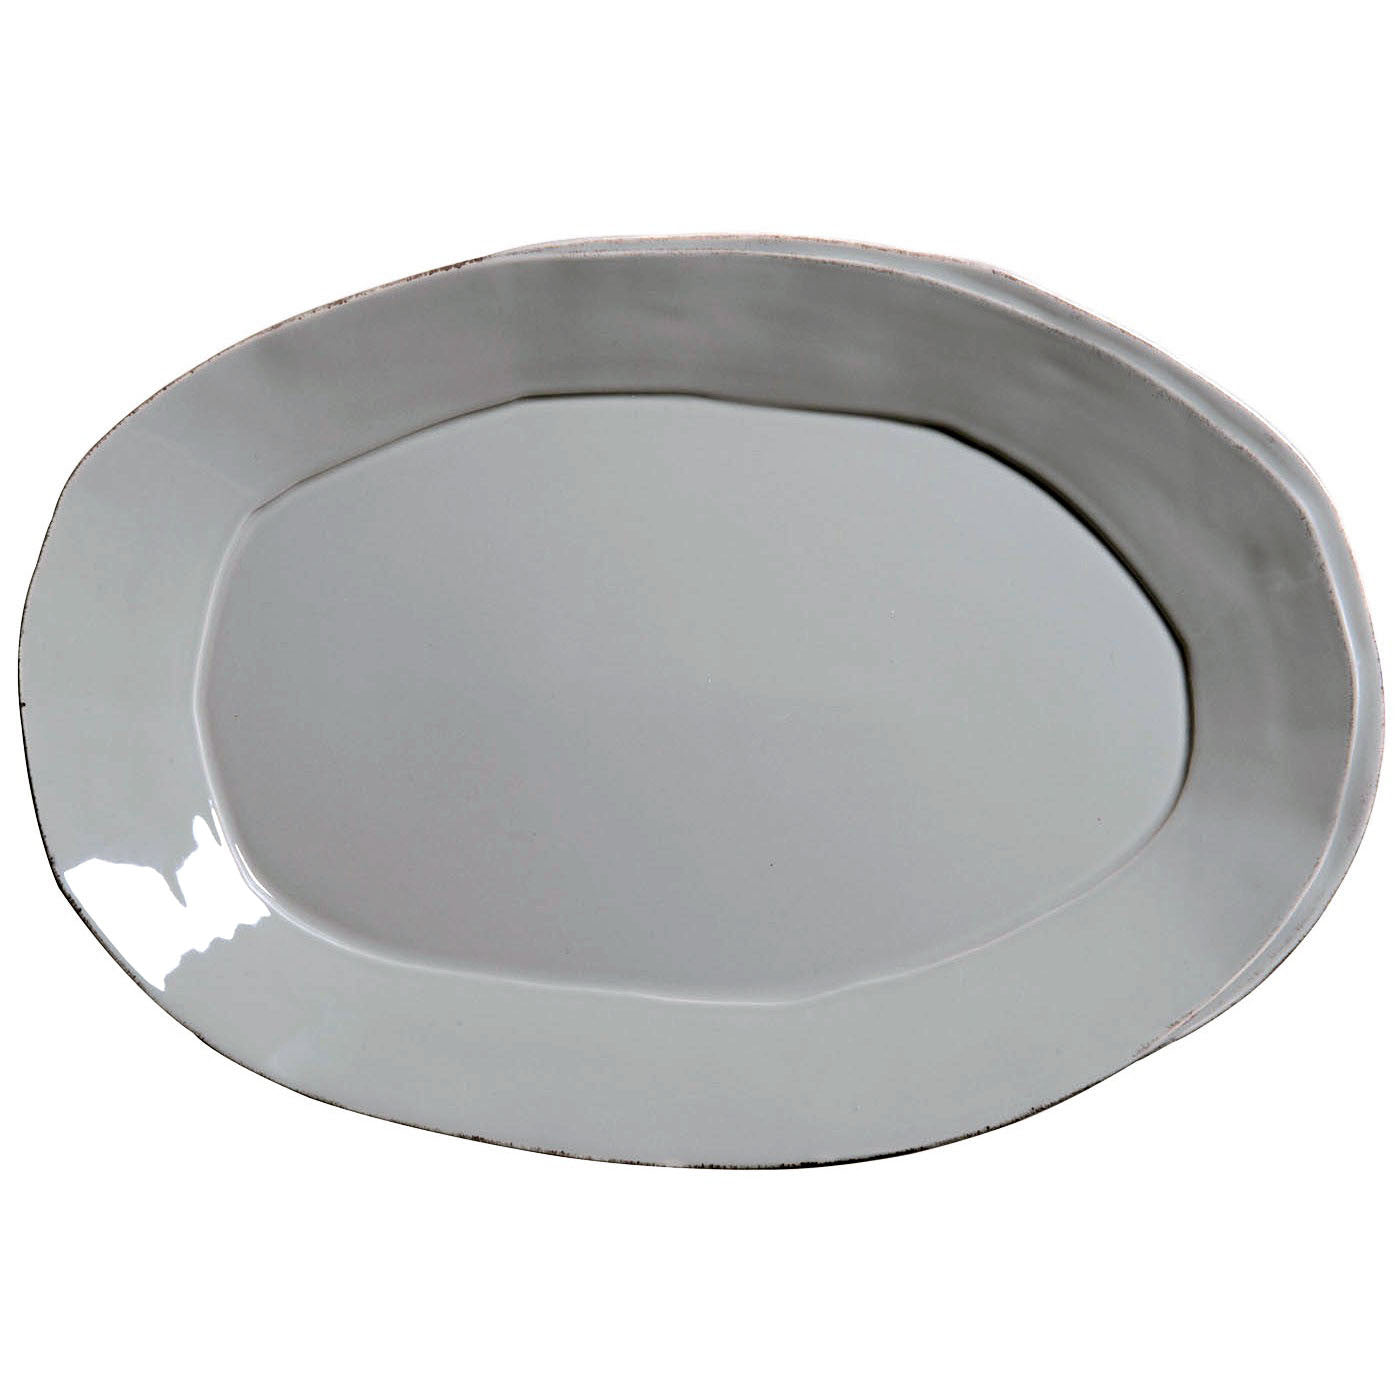 VIETRI: Lastra Gray Oval Platter - Artistica.com